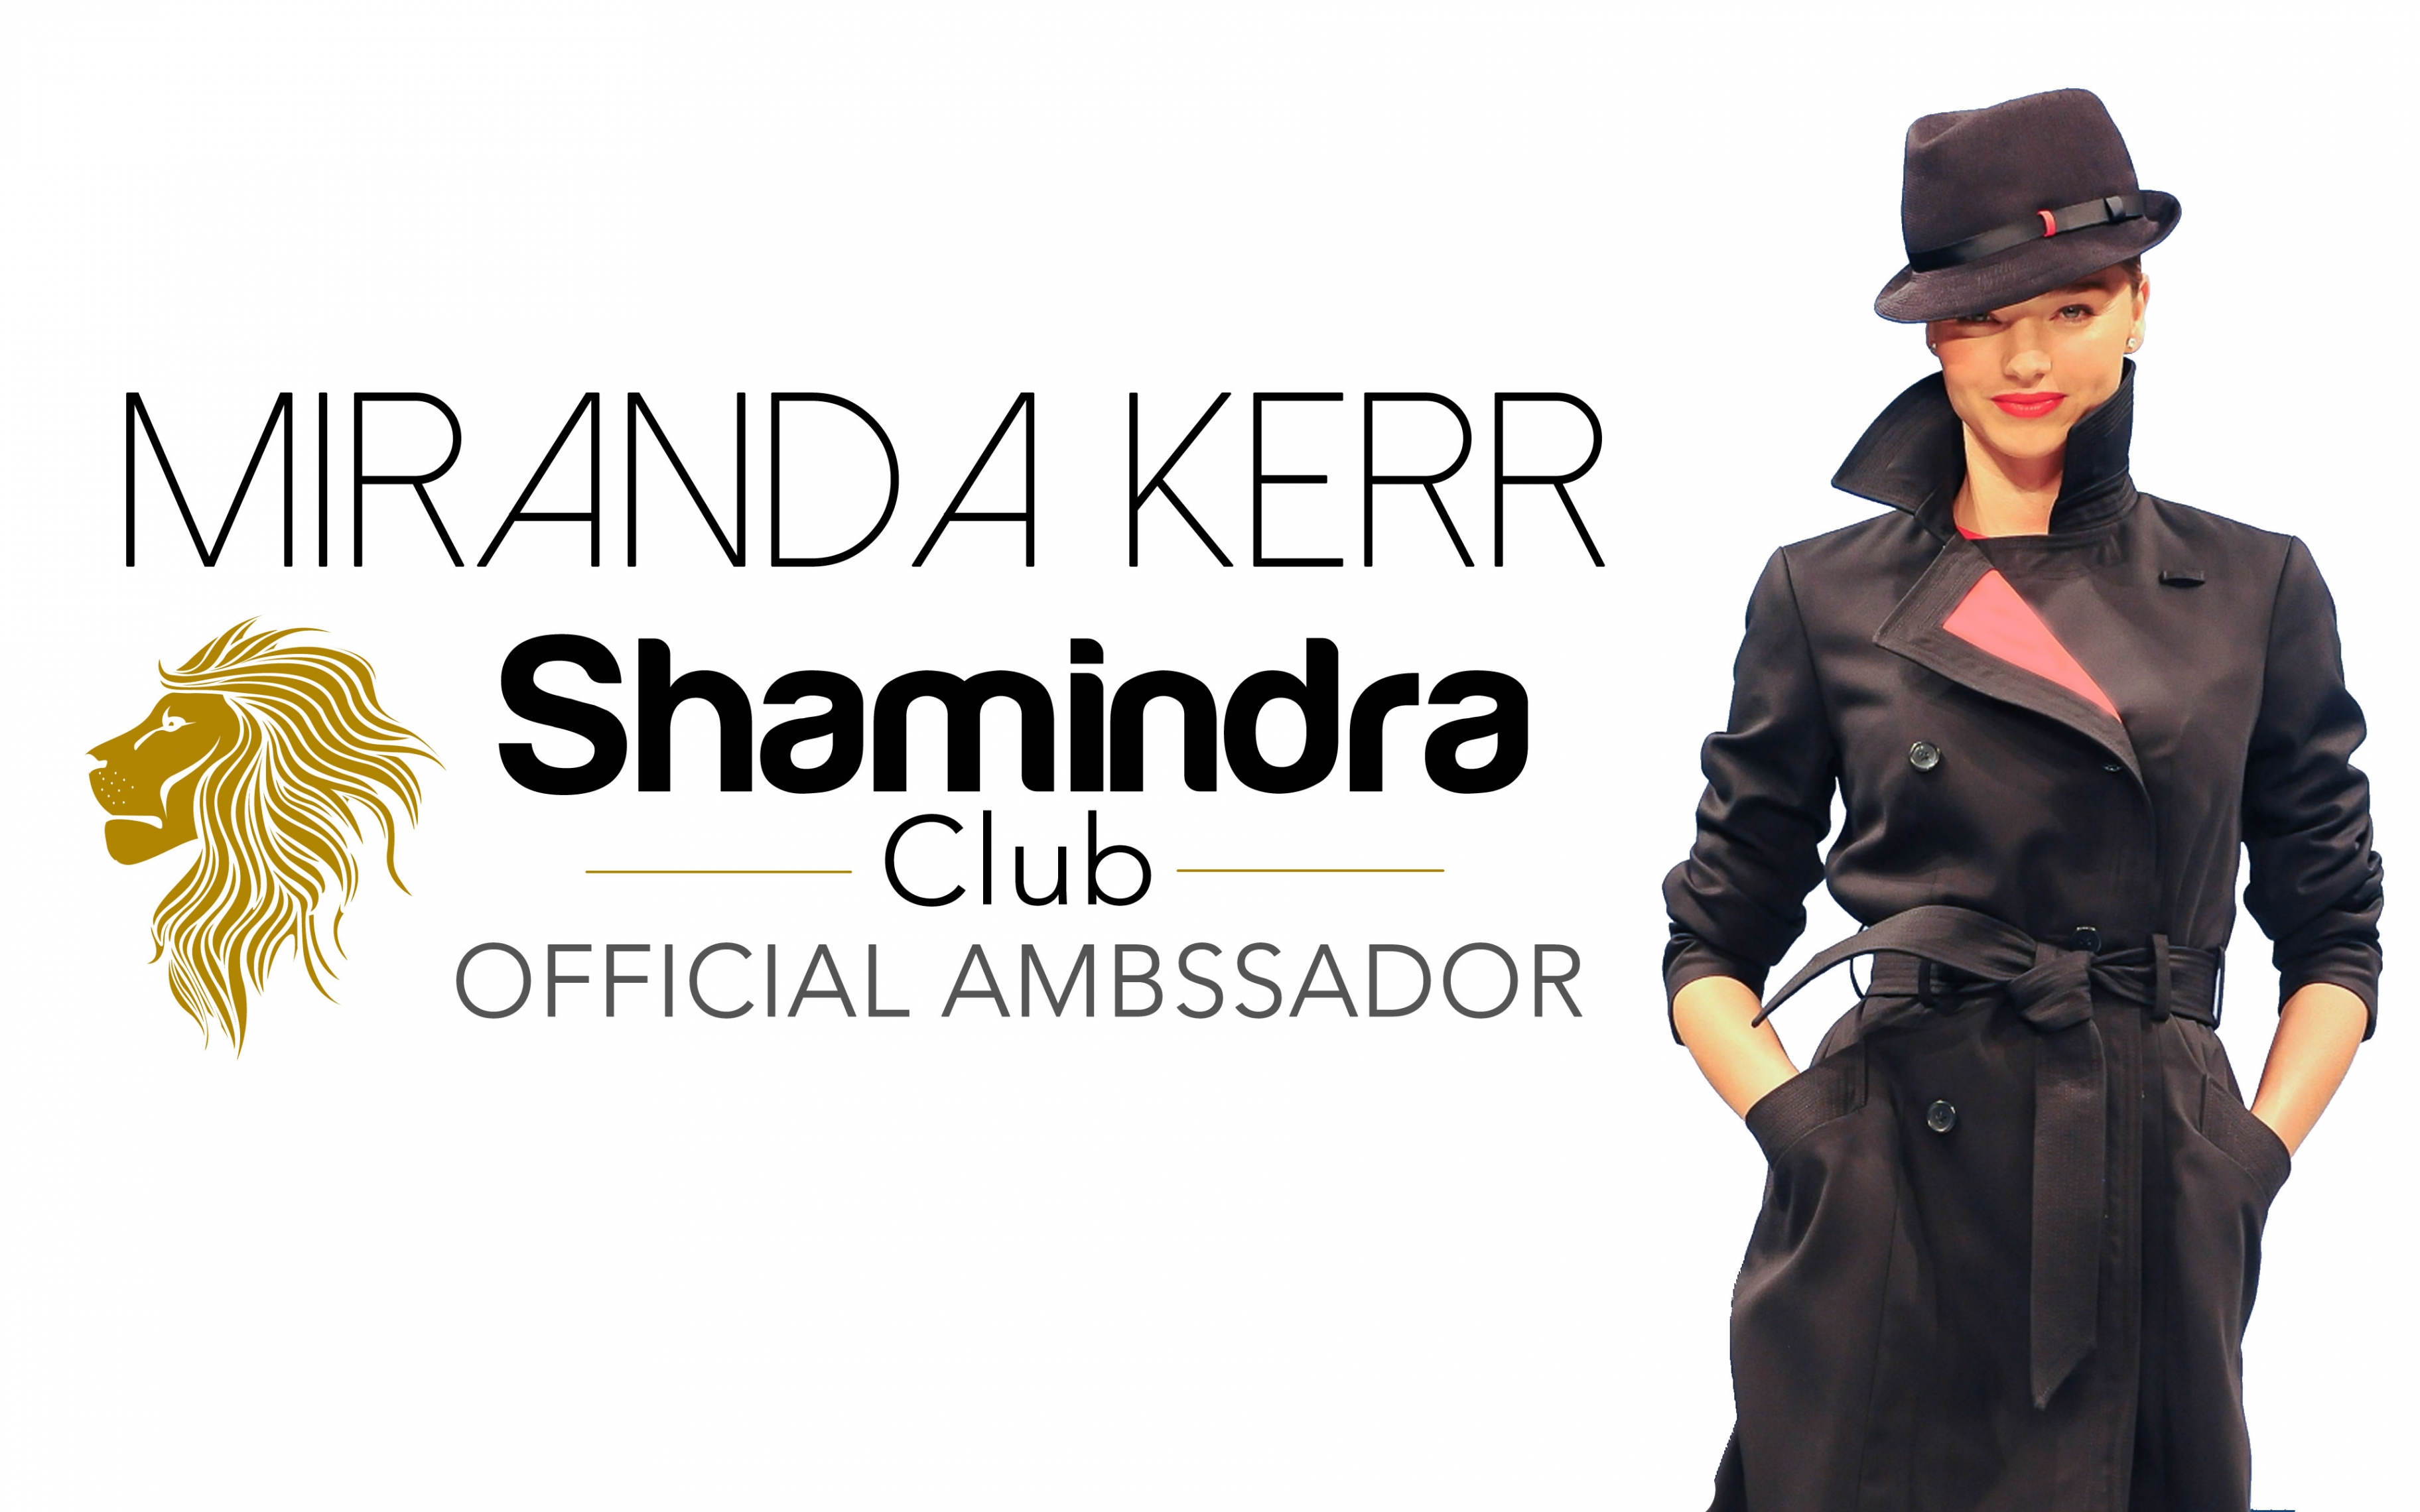 Shamindra Club Official Ambassador Miranda Kerr